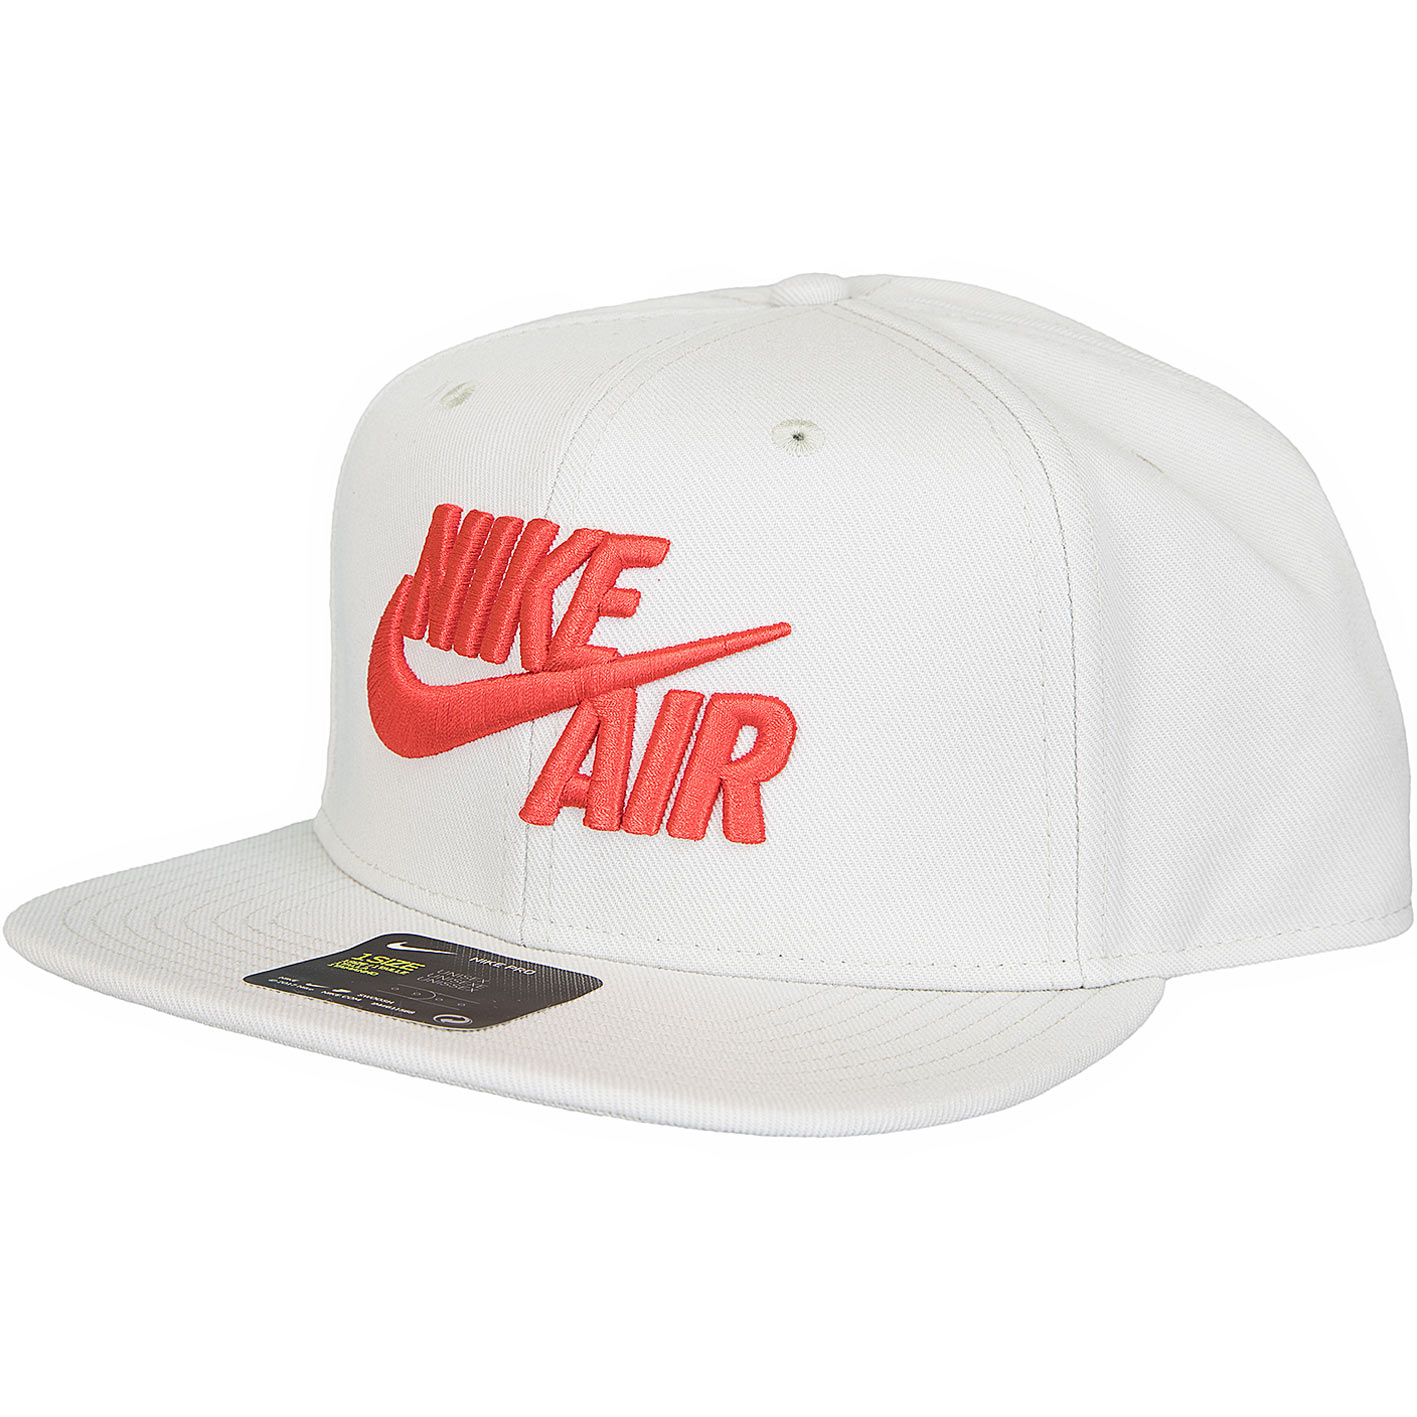 ☆ Nike Snapback Cap Air Classic Pro weiß/rot - hier bestellen!